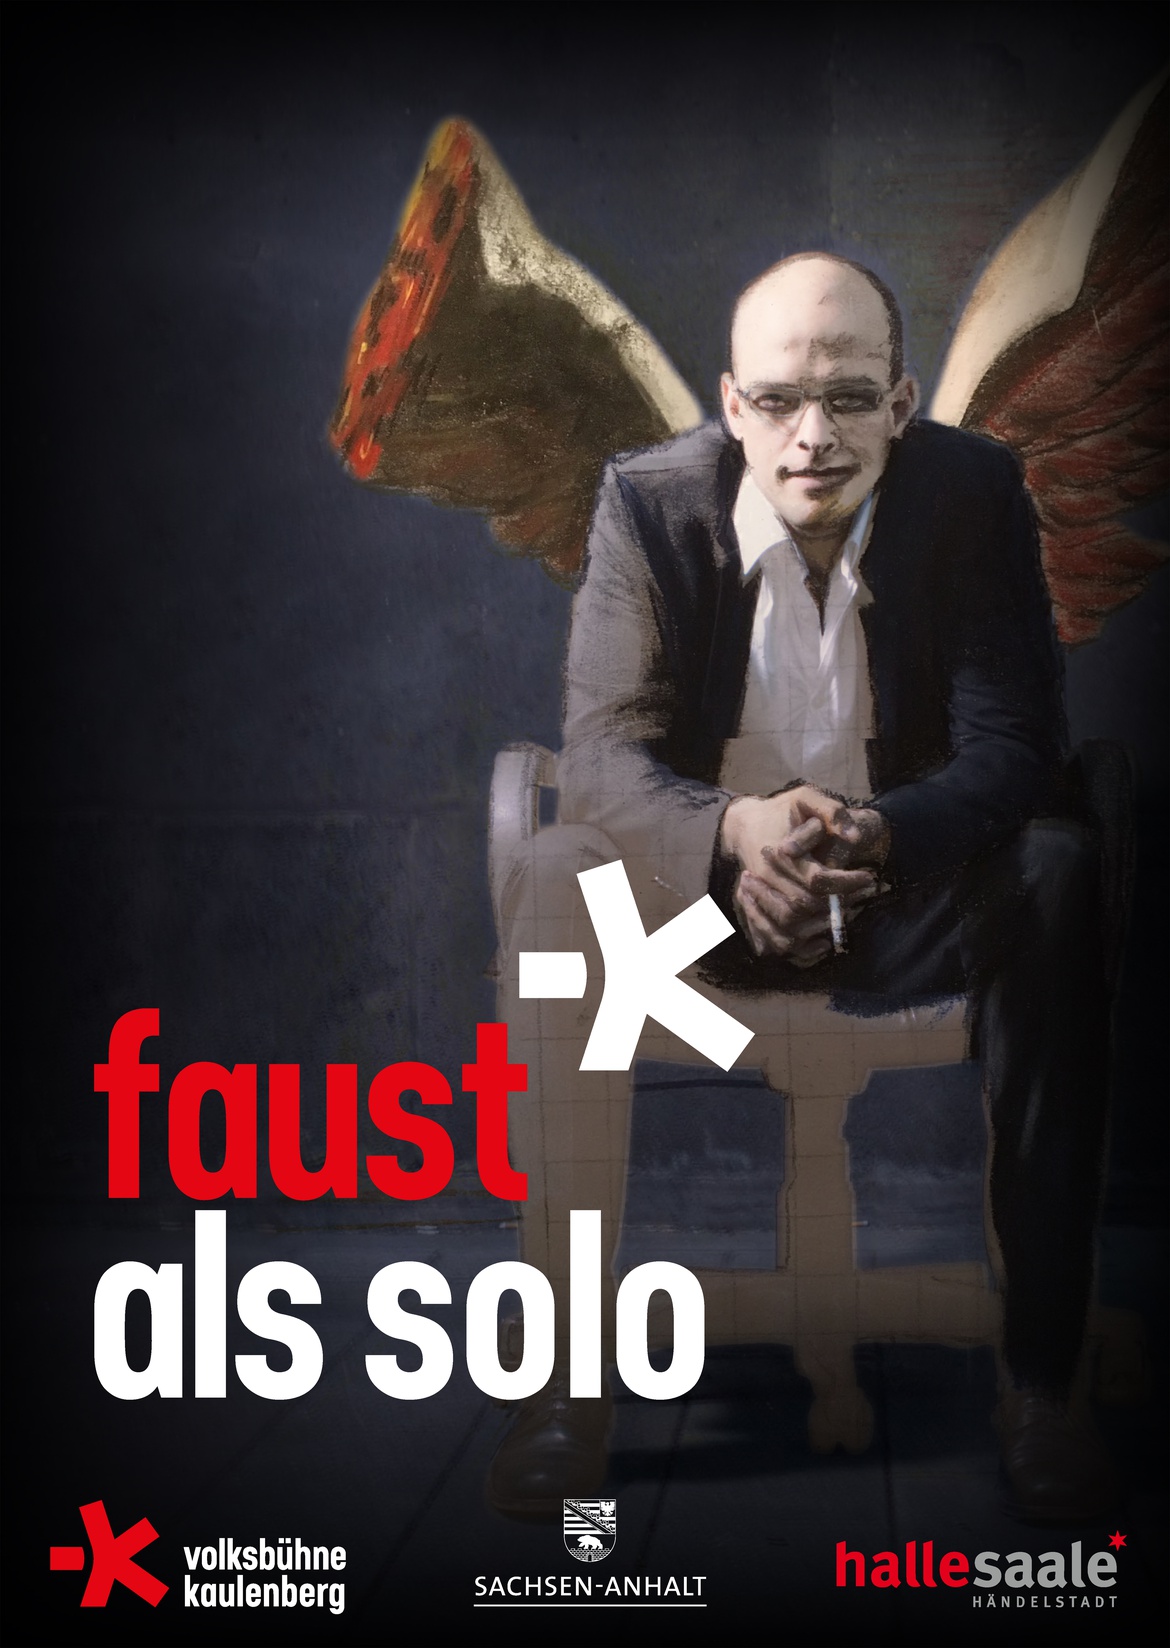 Faust als Solo